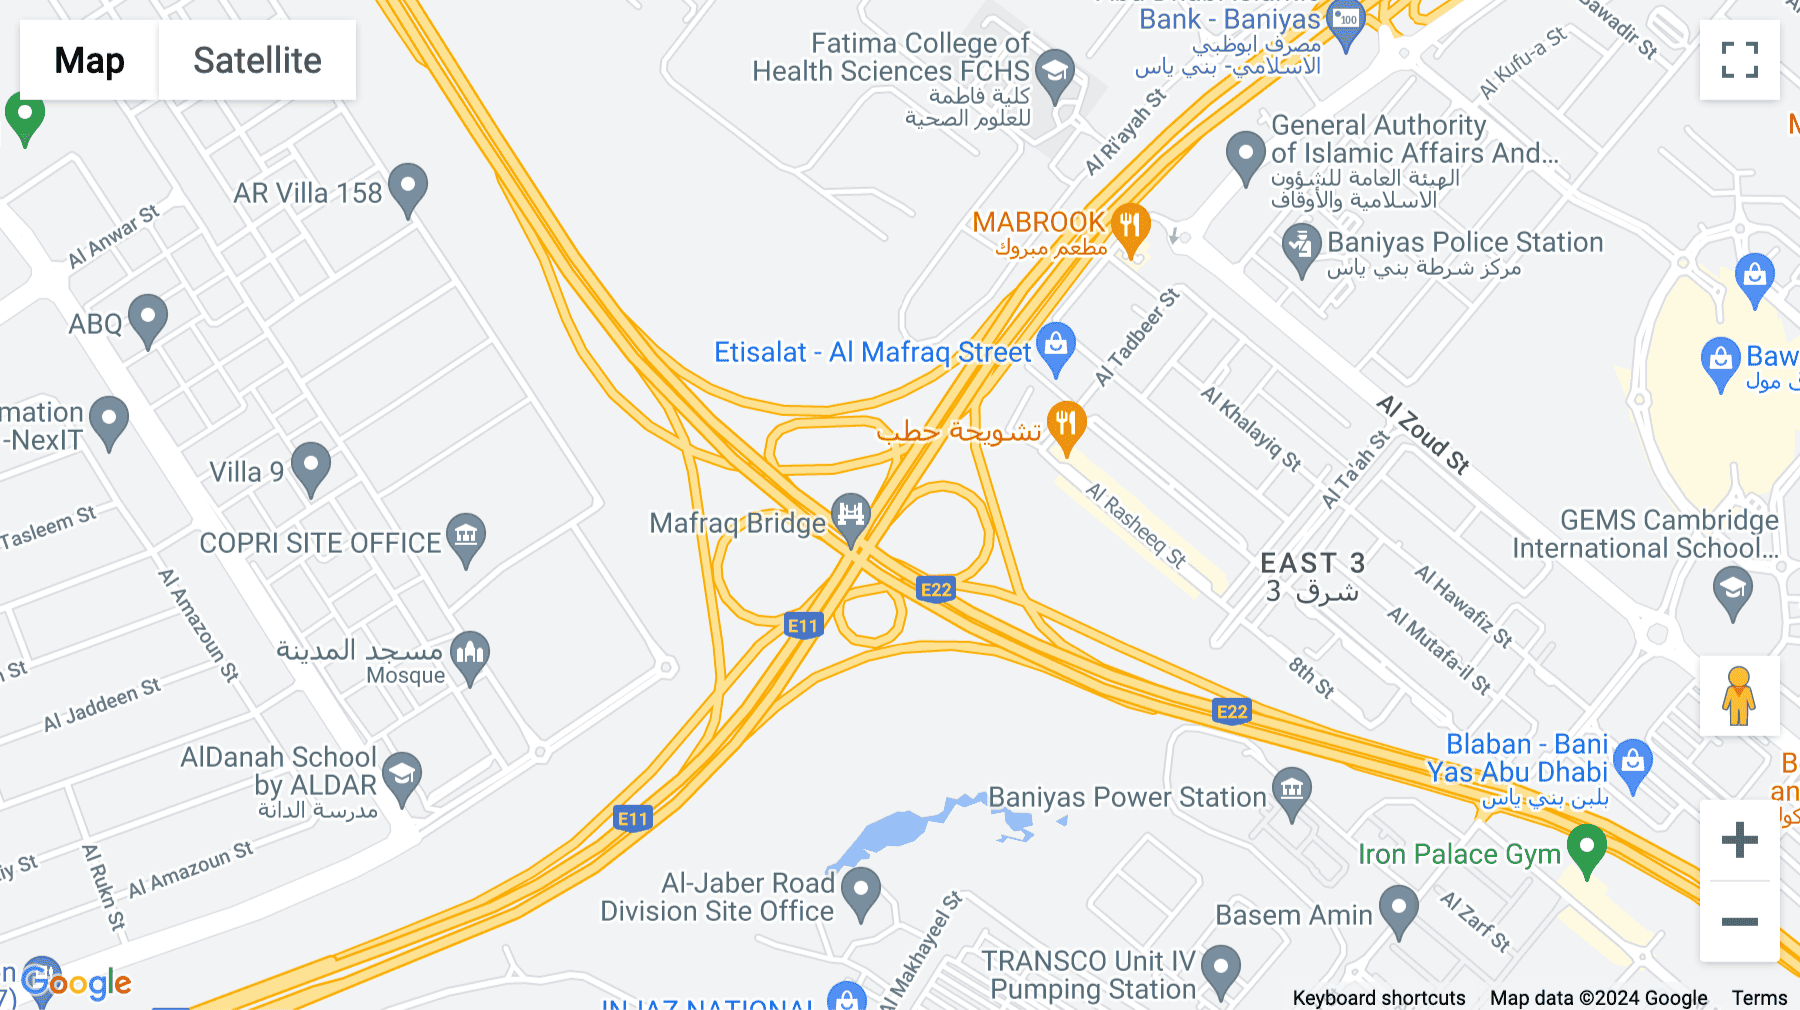 Click for interative map of Sheikh Rashid Bin Saeed Street, Marriott Abu Dhabi Downtown, Abu Dhabi